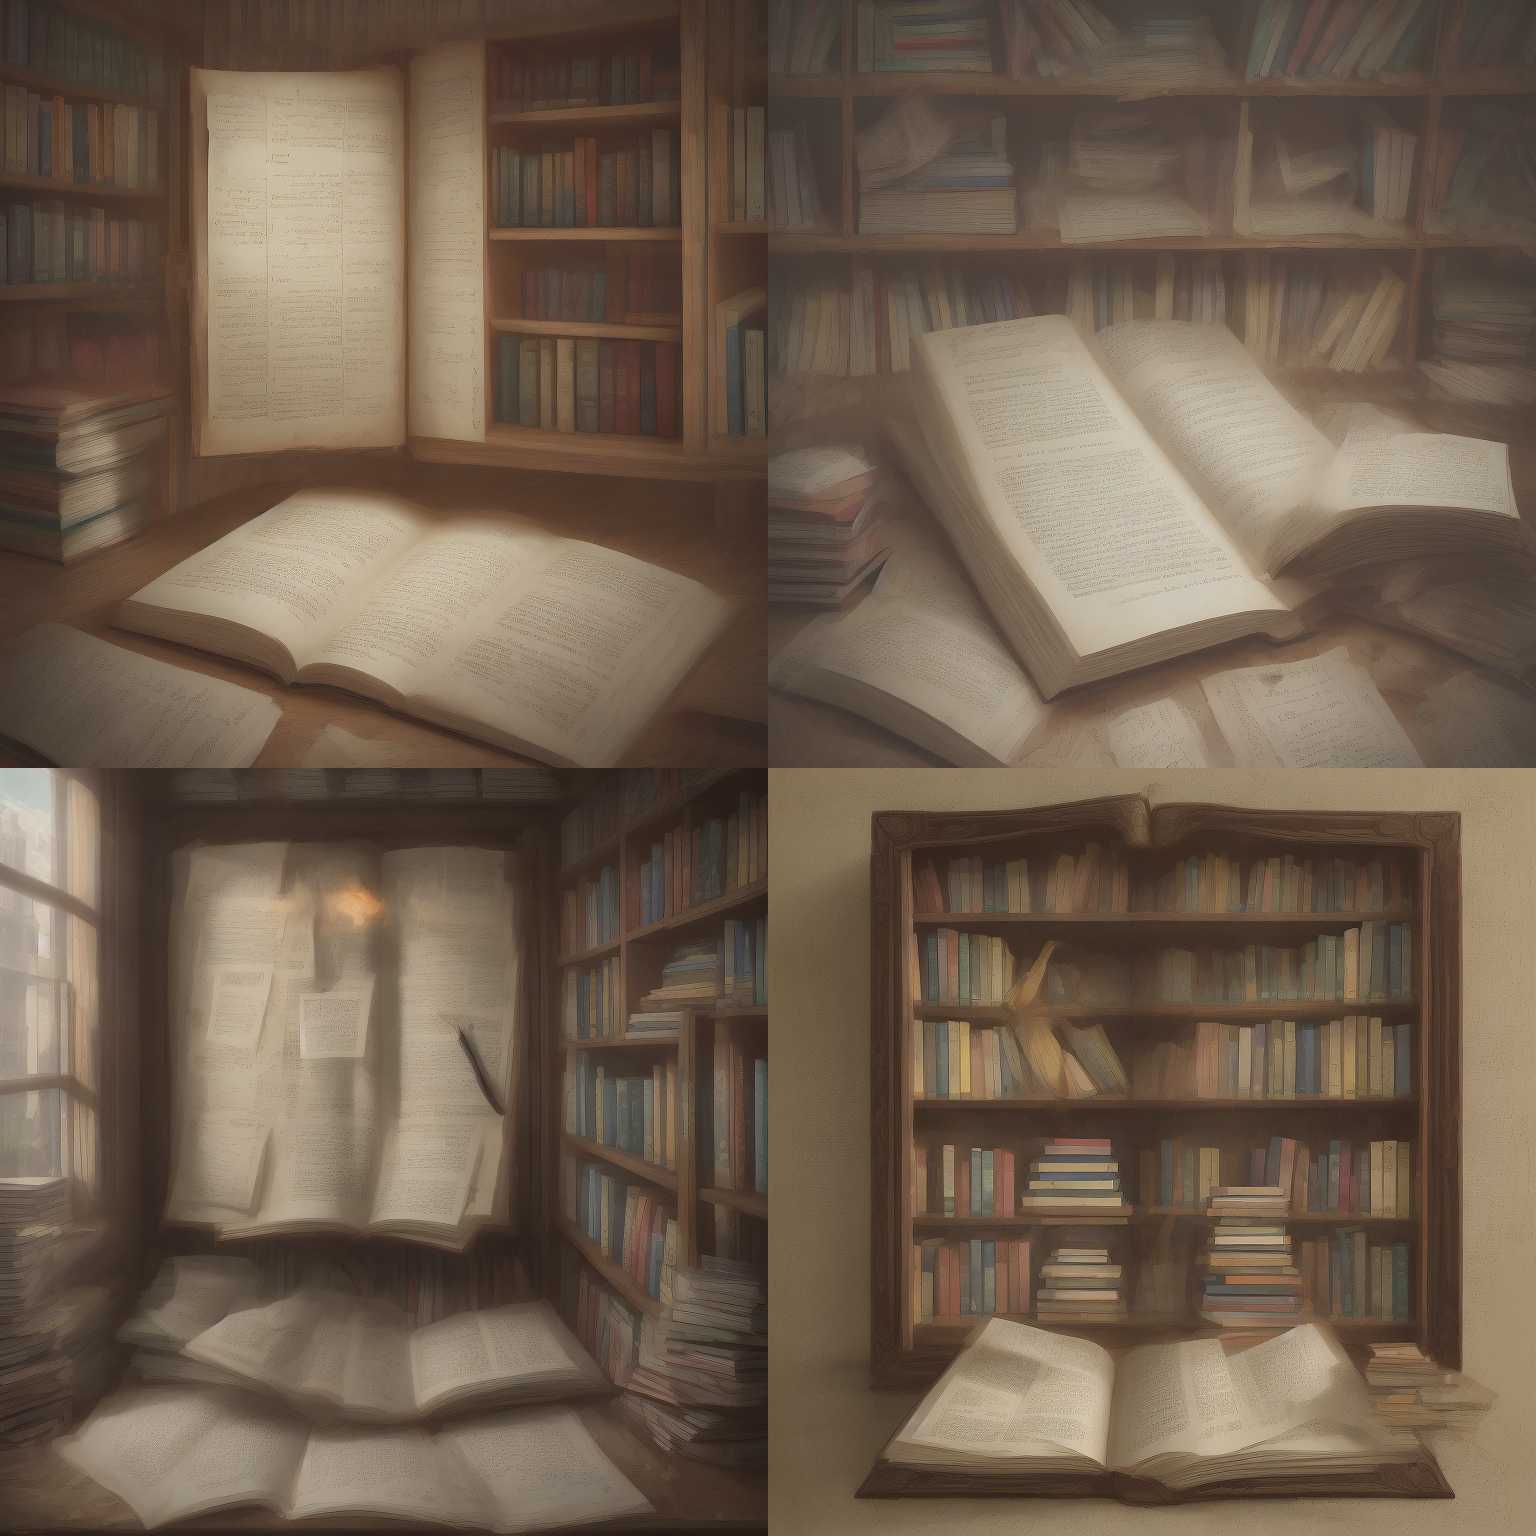 A book left open